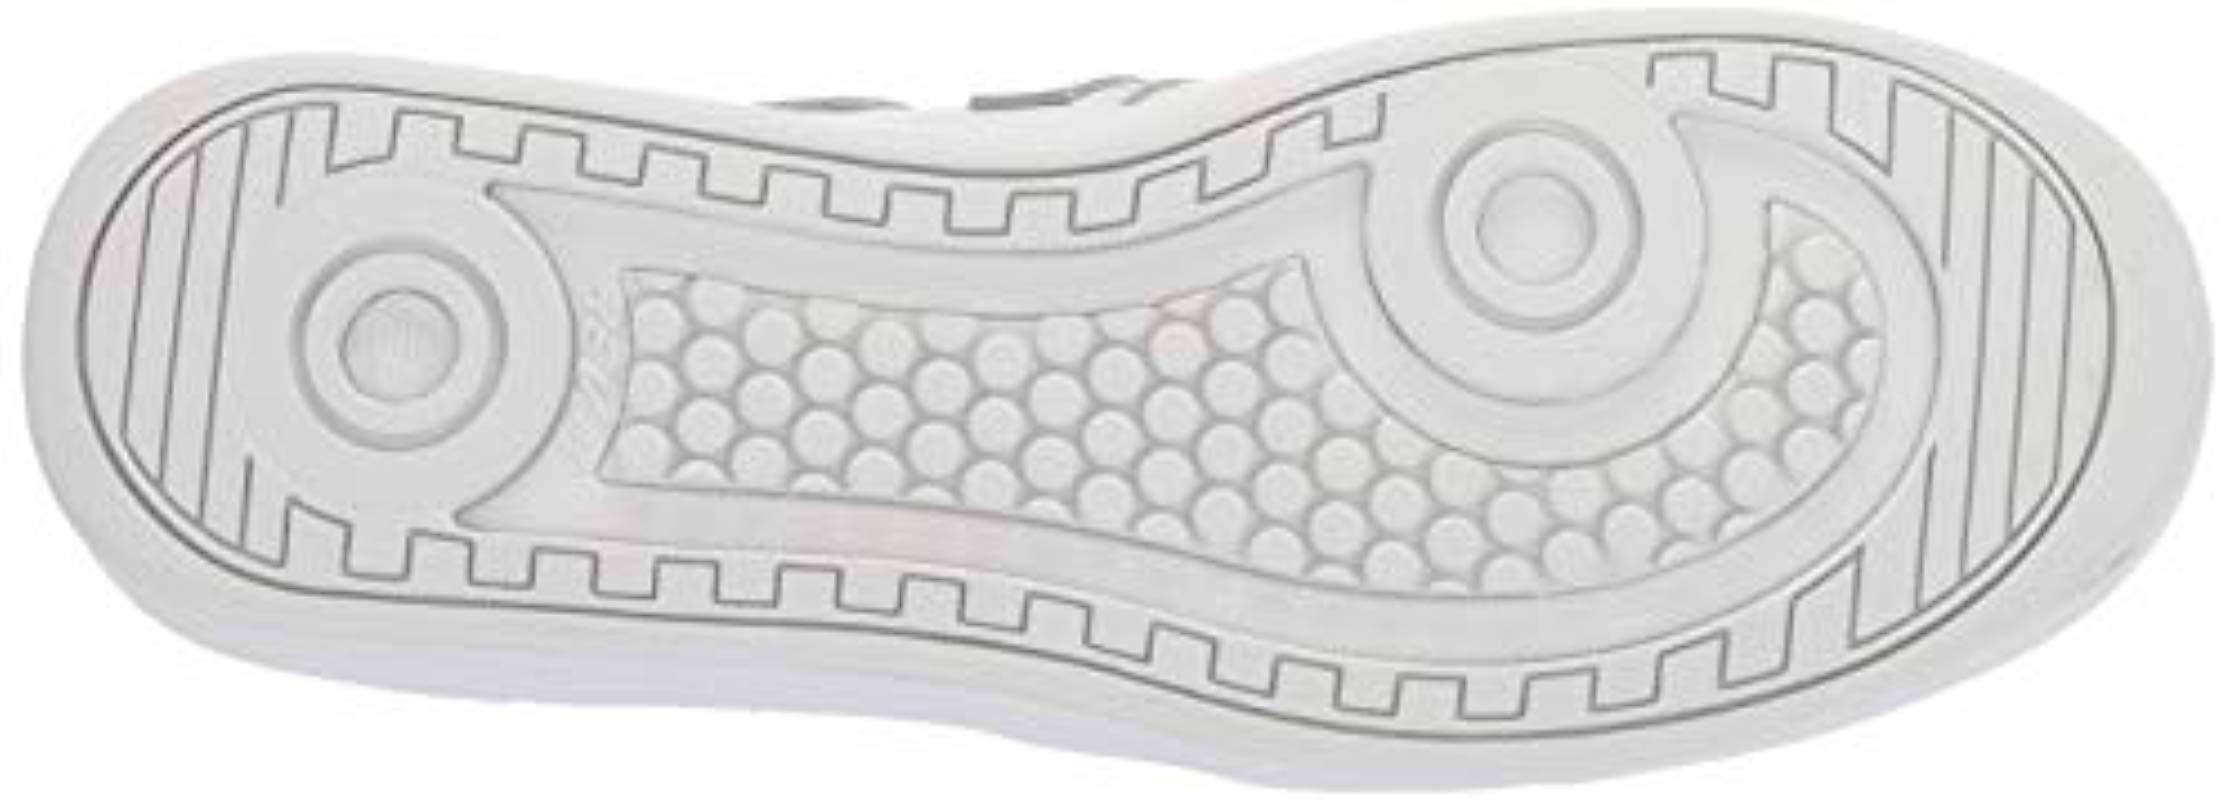 New Balance Canvas 300 V1 Court Sneaker in White/Print (White) - Lyst